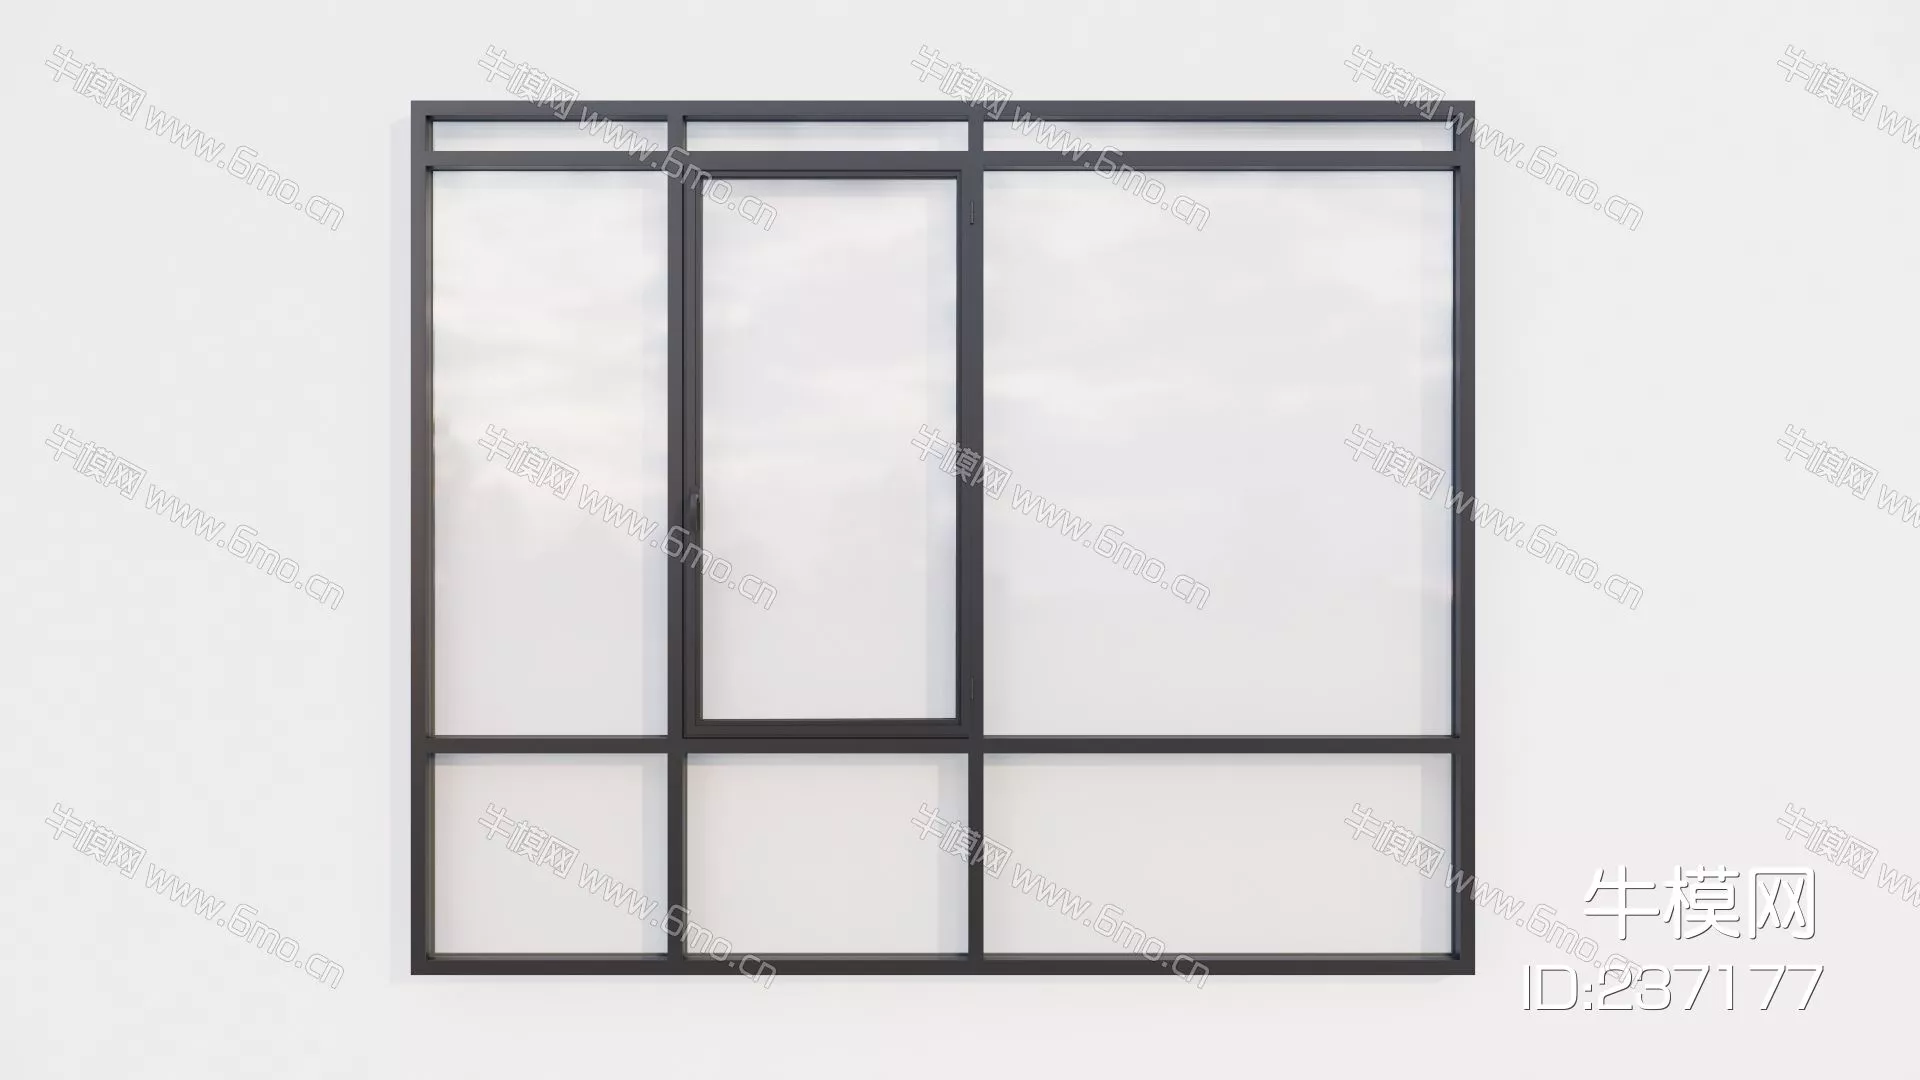 MODERN DOOR AND WINDOWS - SKETCHUP 3D MODEL - ENSCAPE - 237177